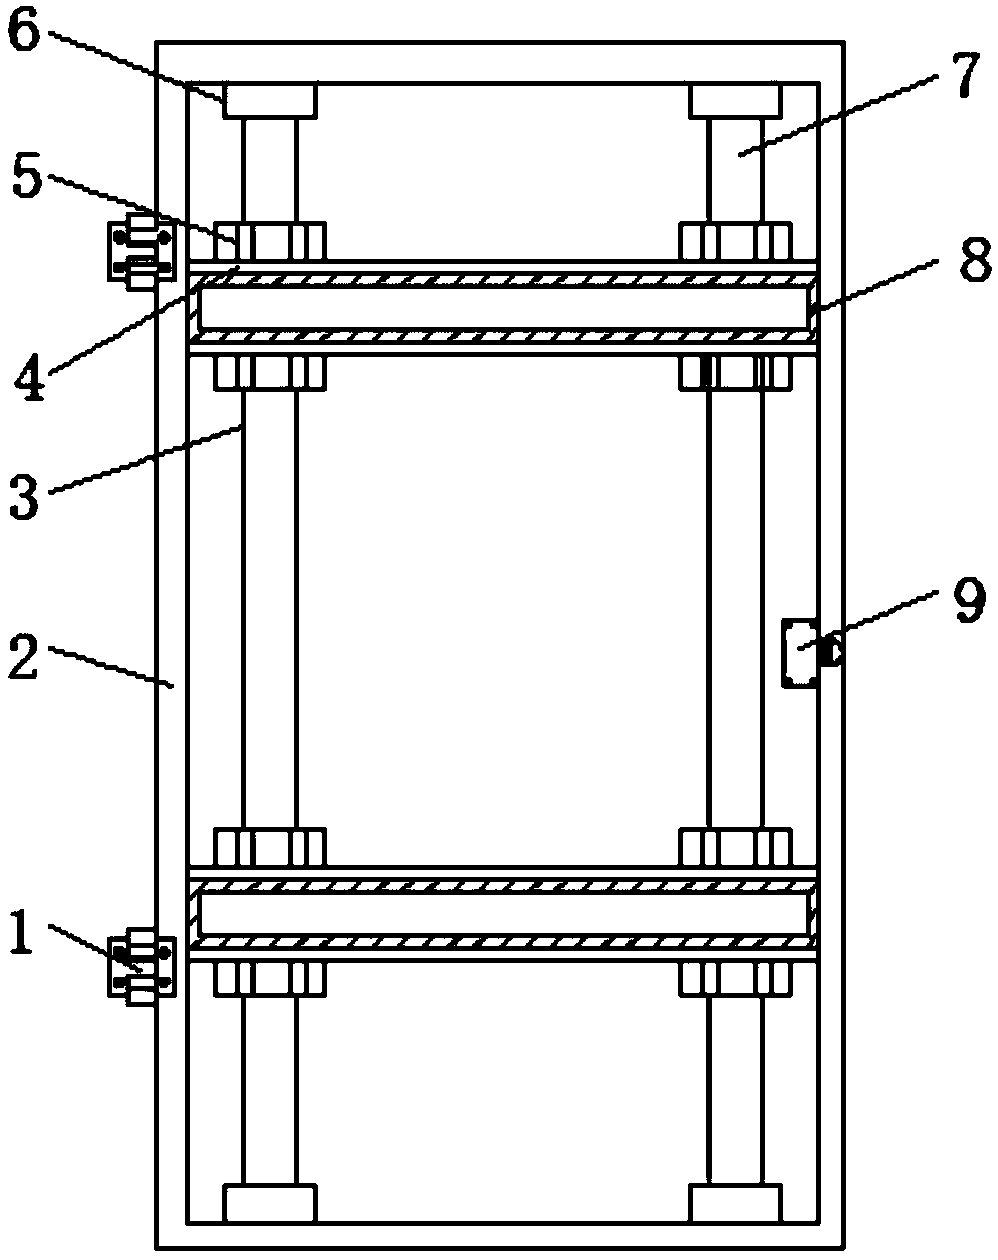 Multifunctional cabinet door for power distribution cabinet on mechanical equipment